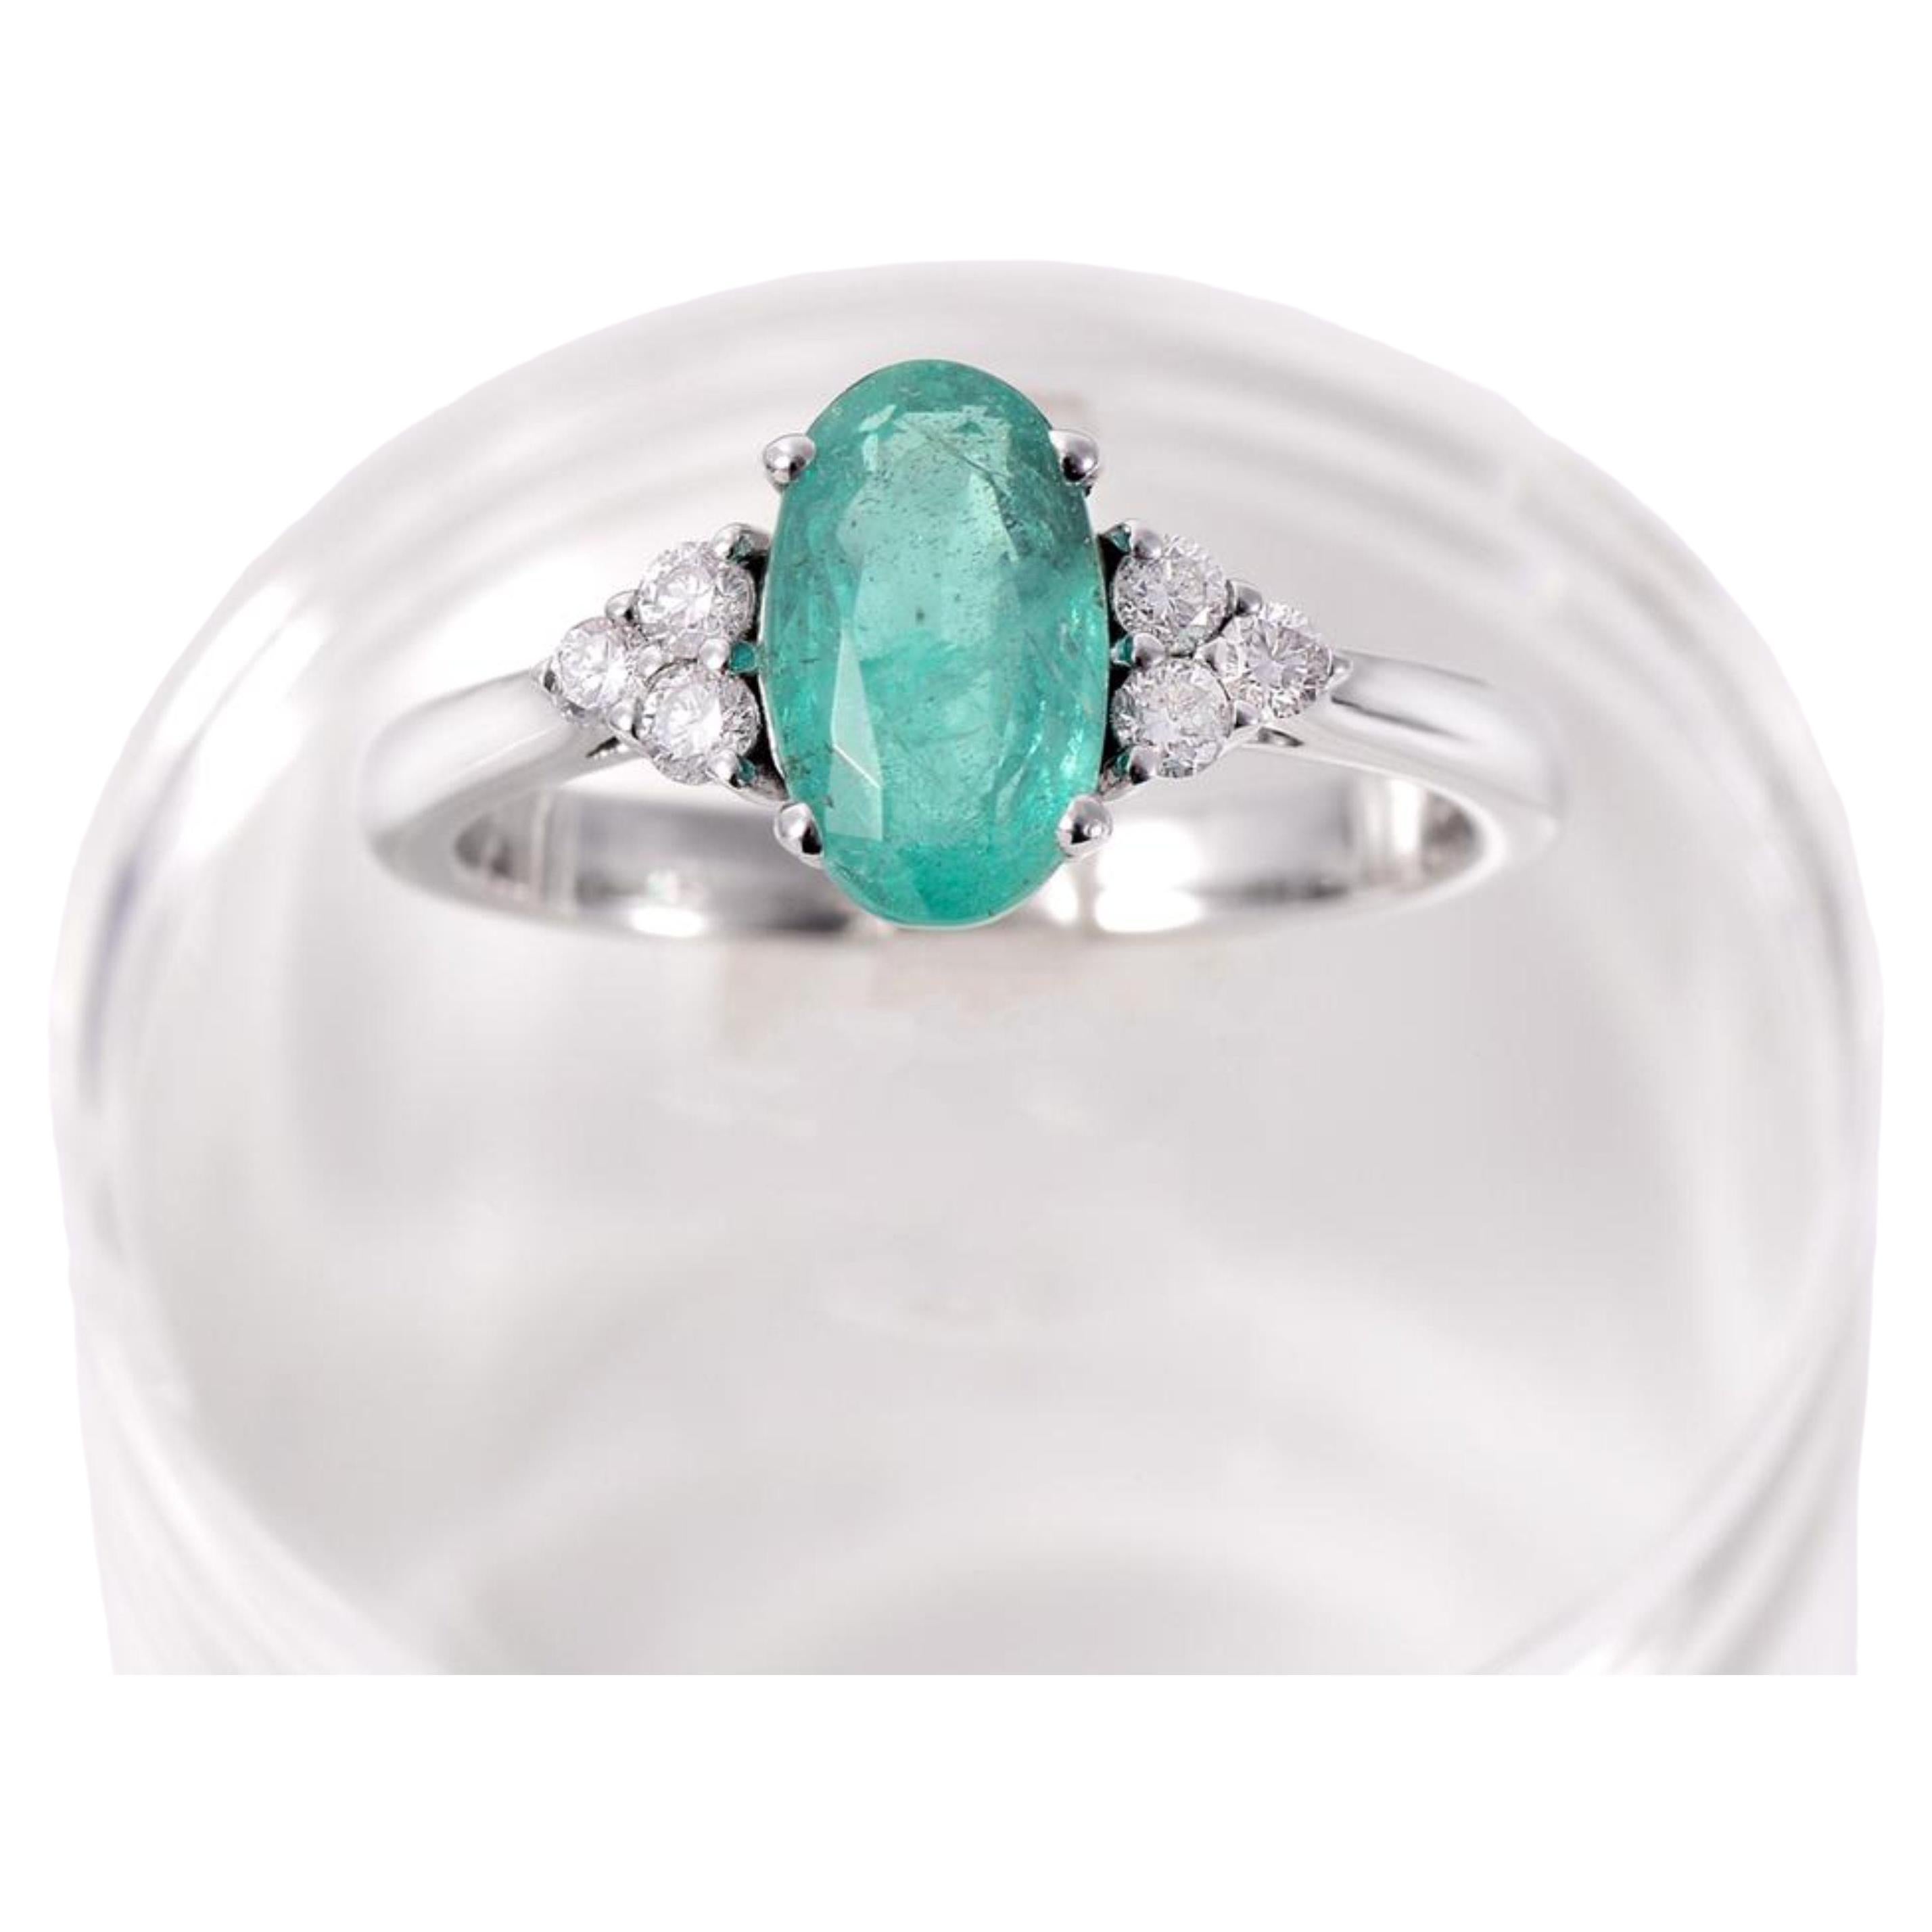 For Sale:  Antique White Gold 2 Carat Emerald Engagement Ring, Unique Diamond Wedding Ring